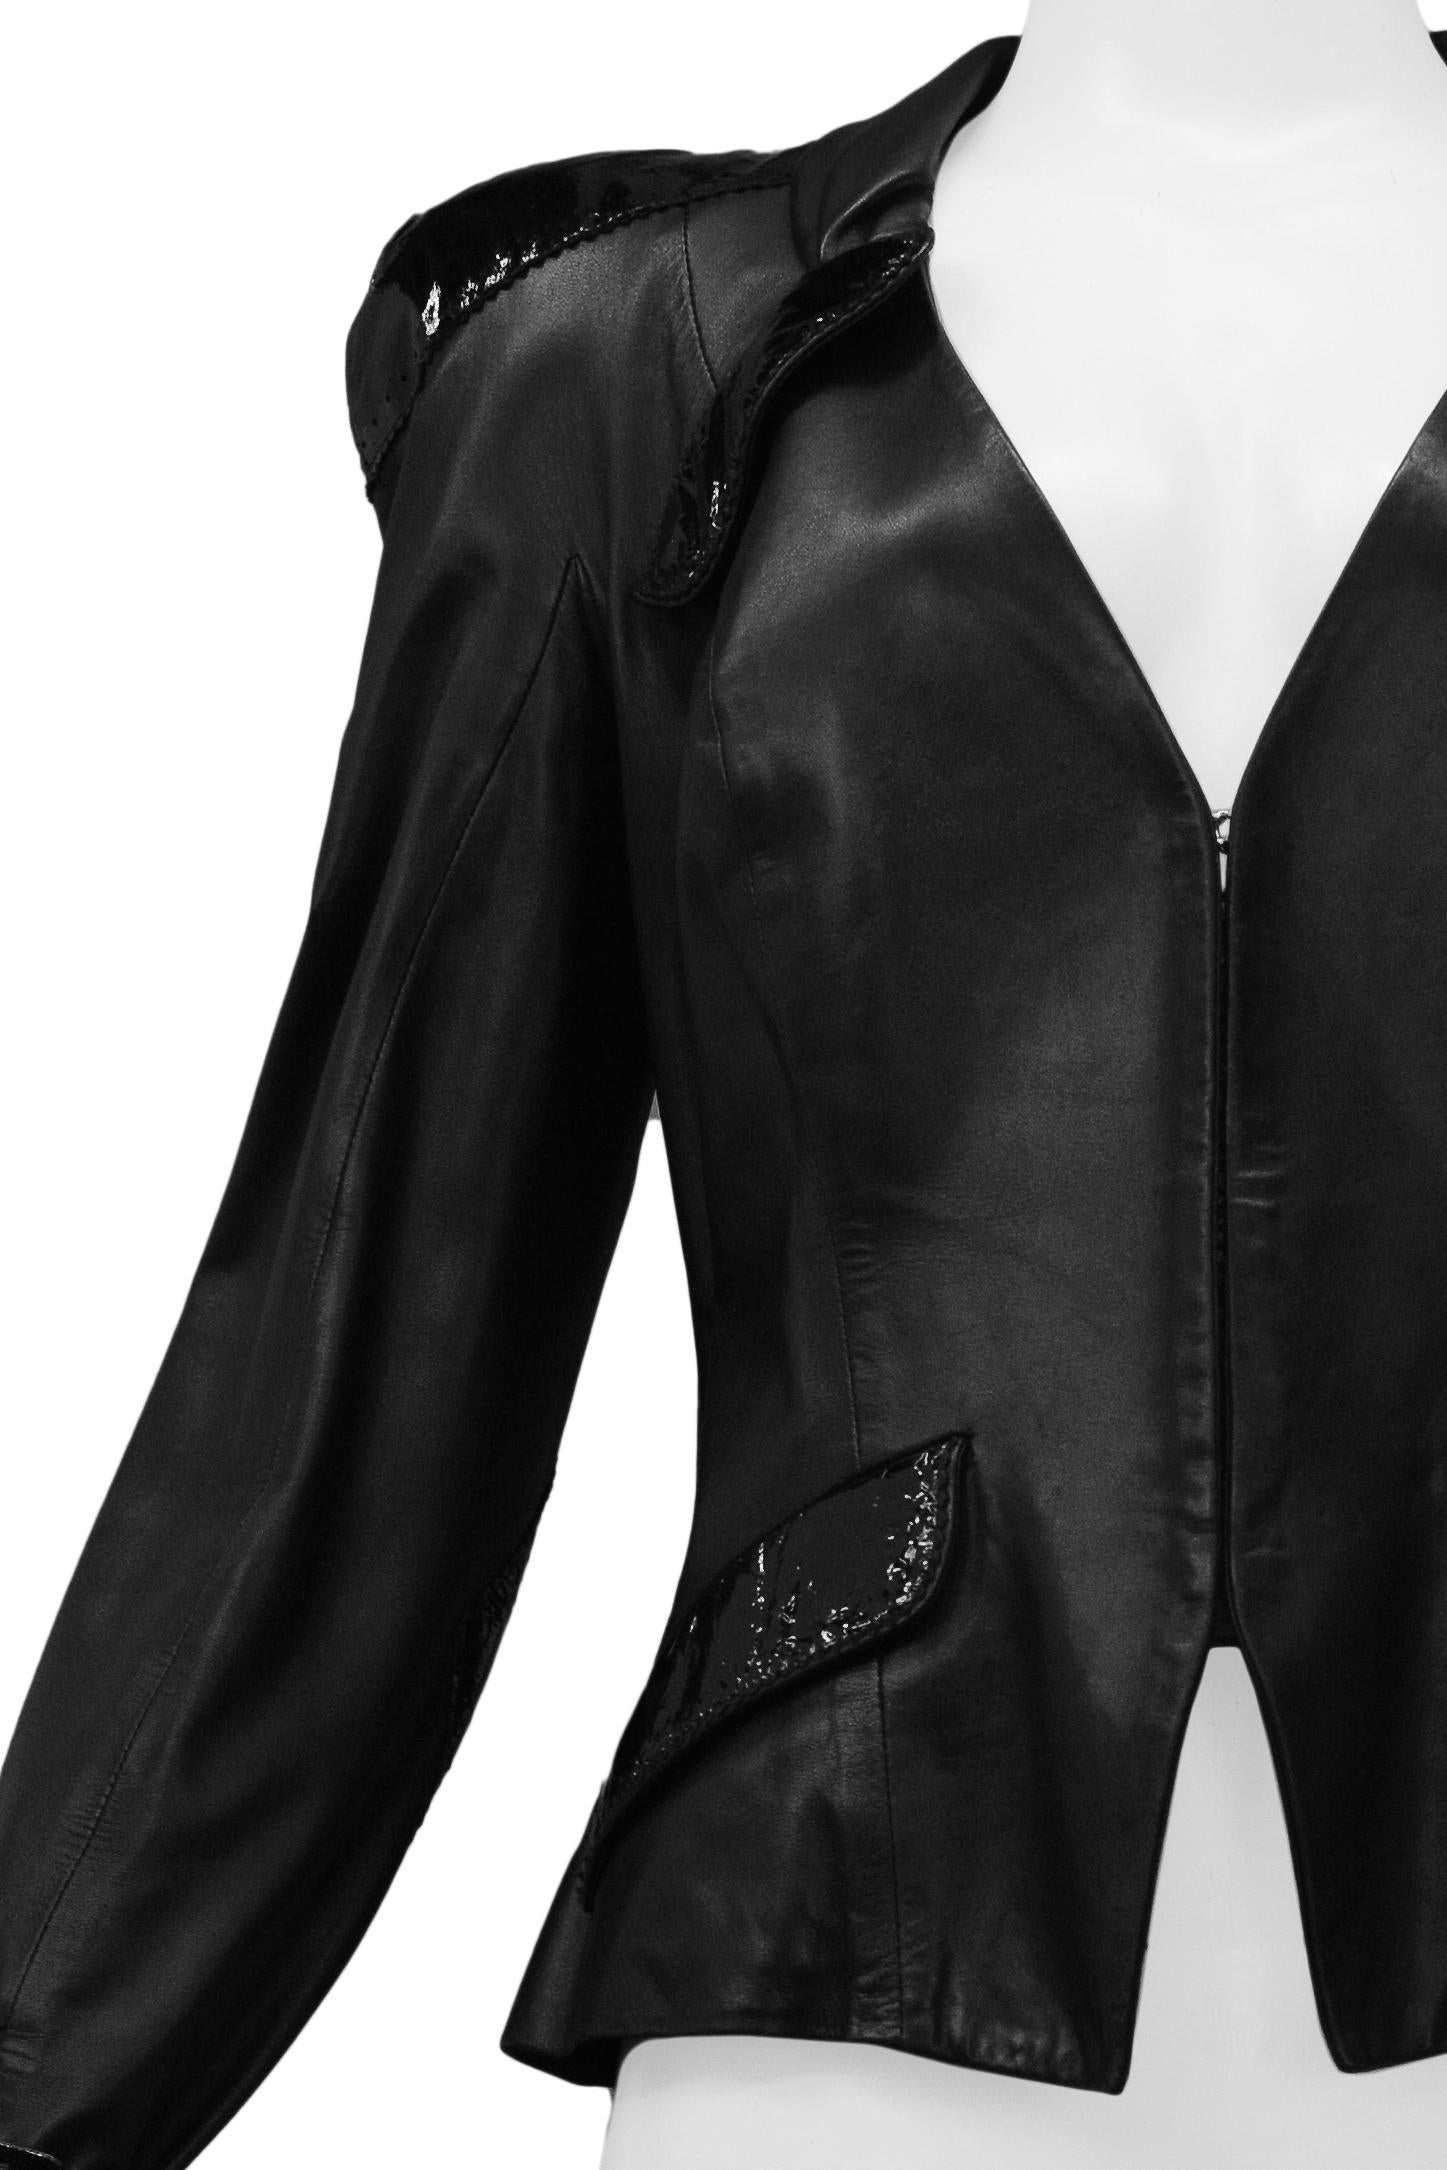 dior black jacket